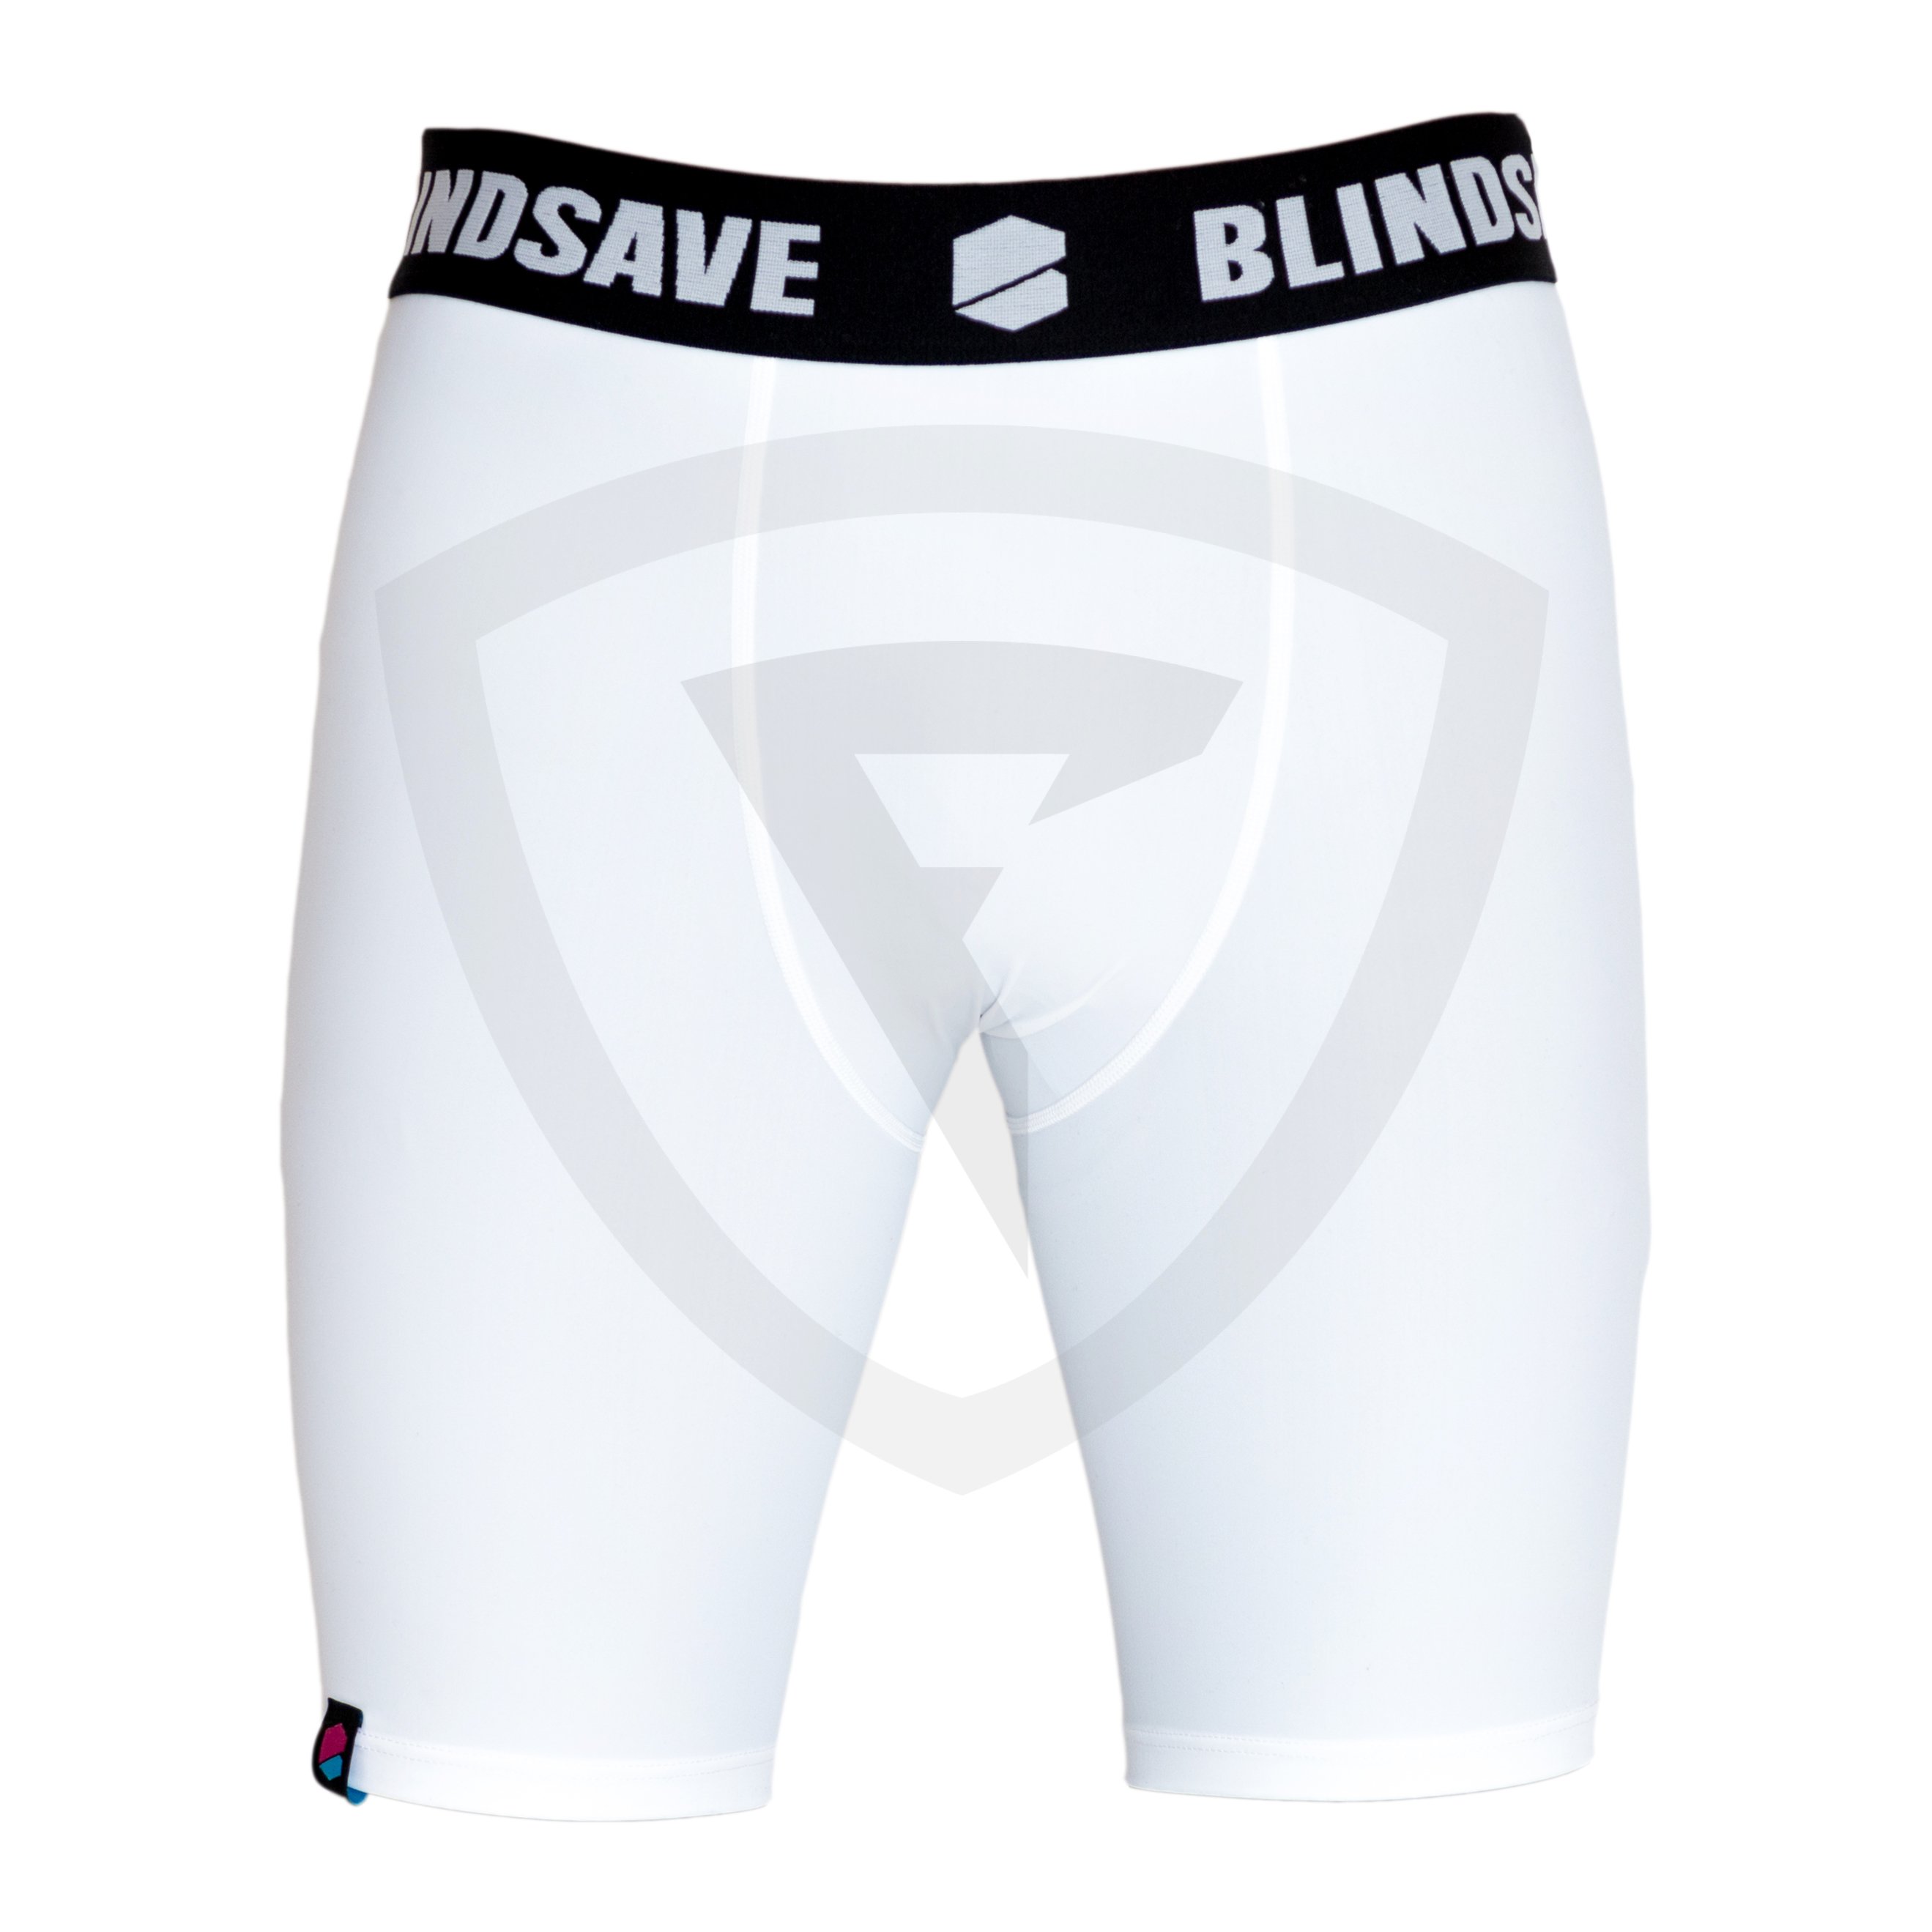 Blindsave Compression Shorts L bílá